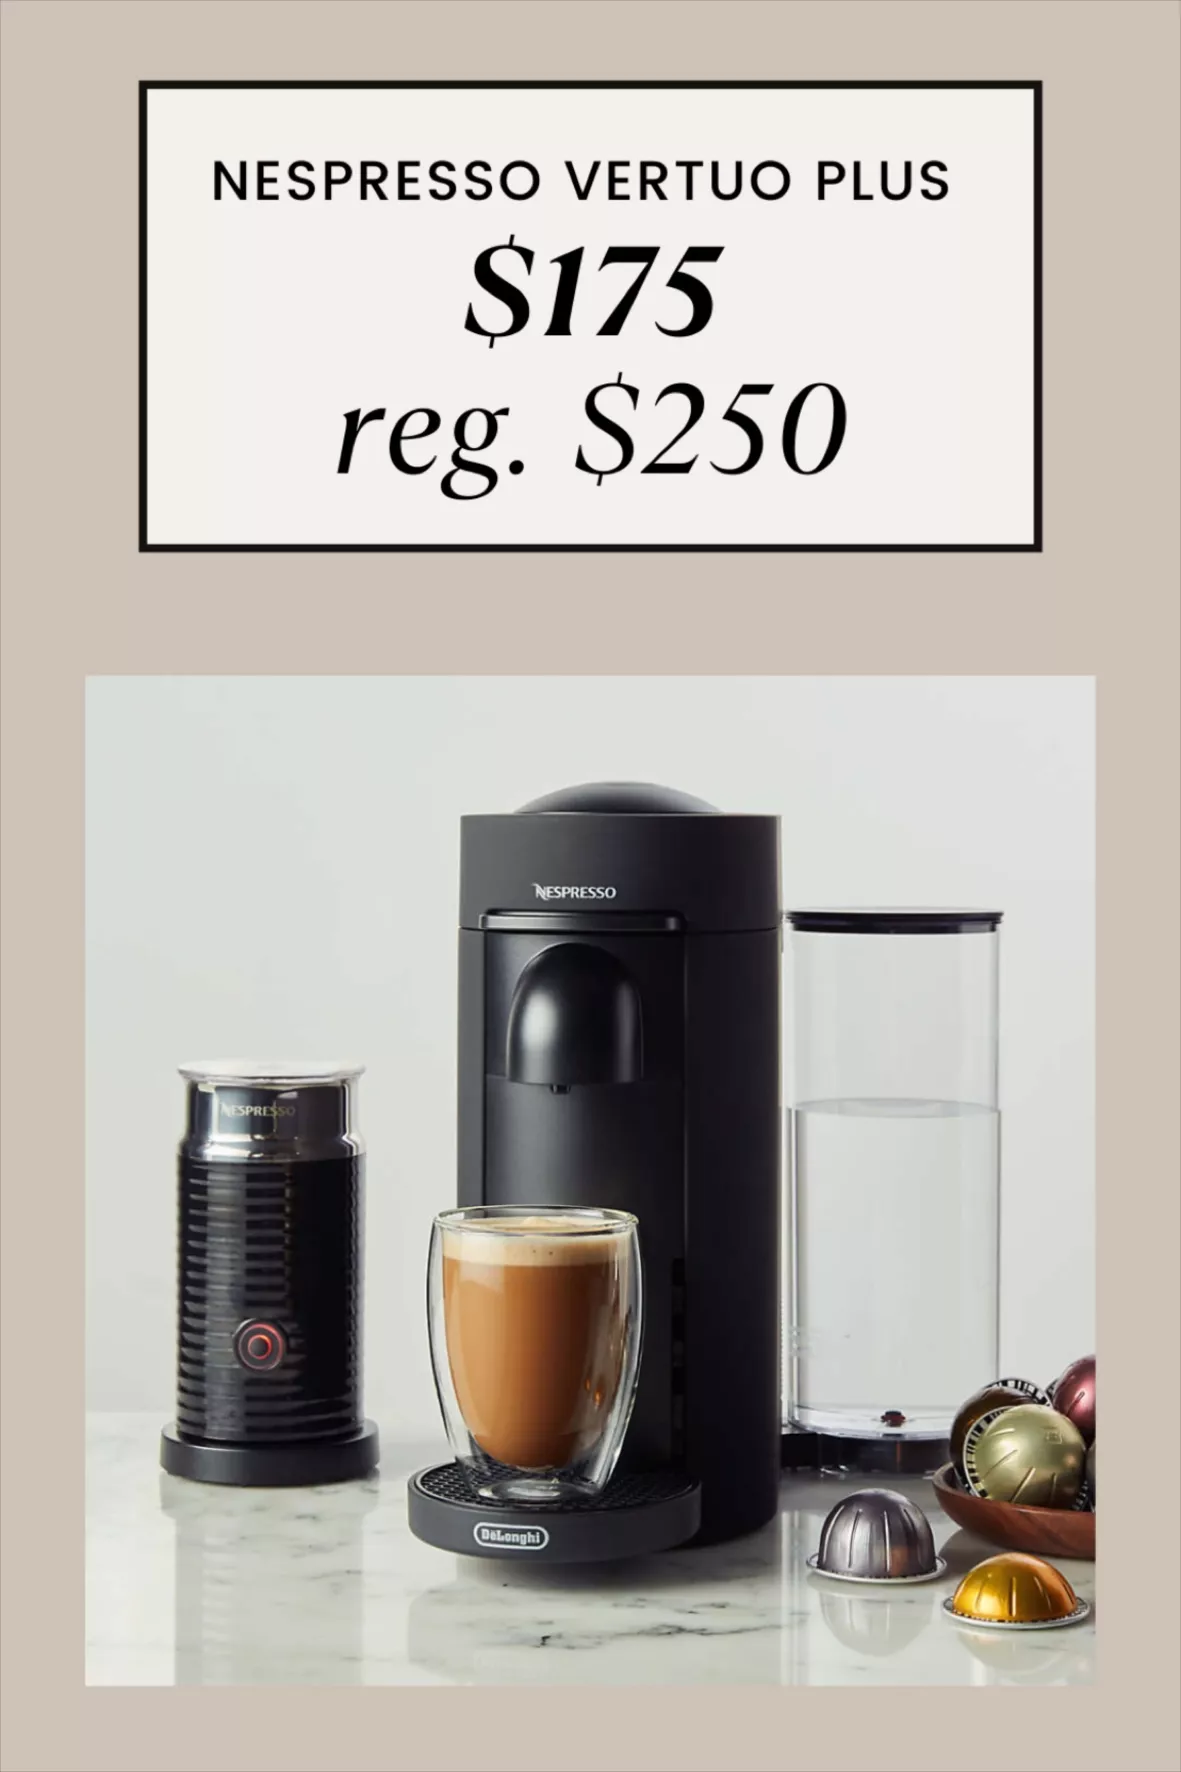 Nespresso VertuoPlus Coffee and Espresso Machine by De'Longhi with